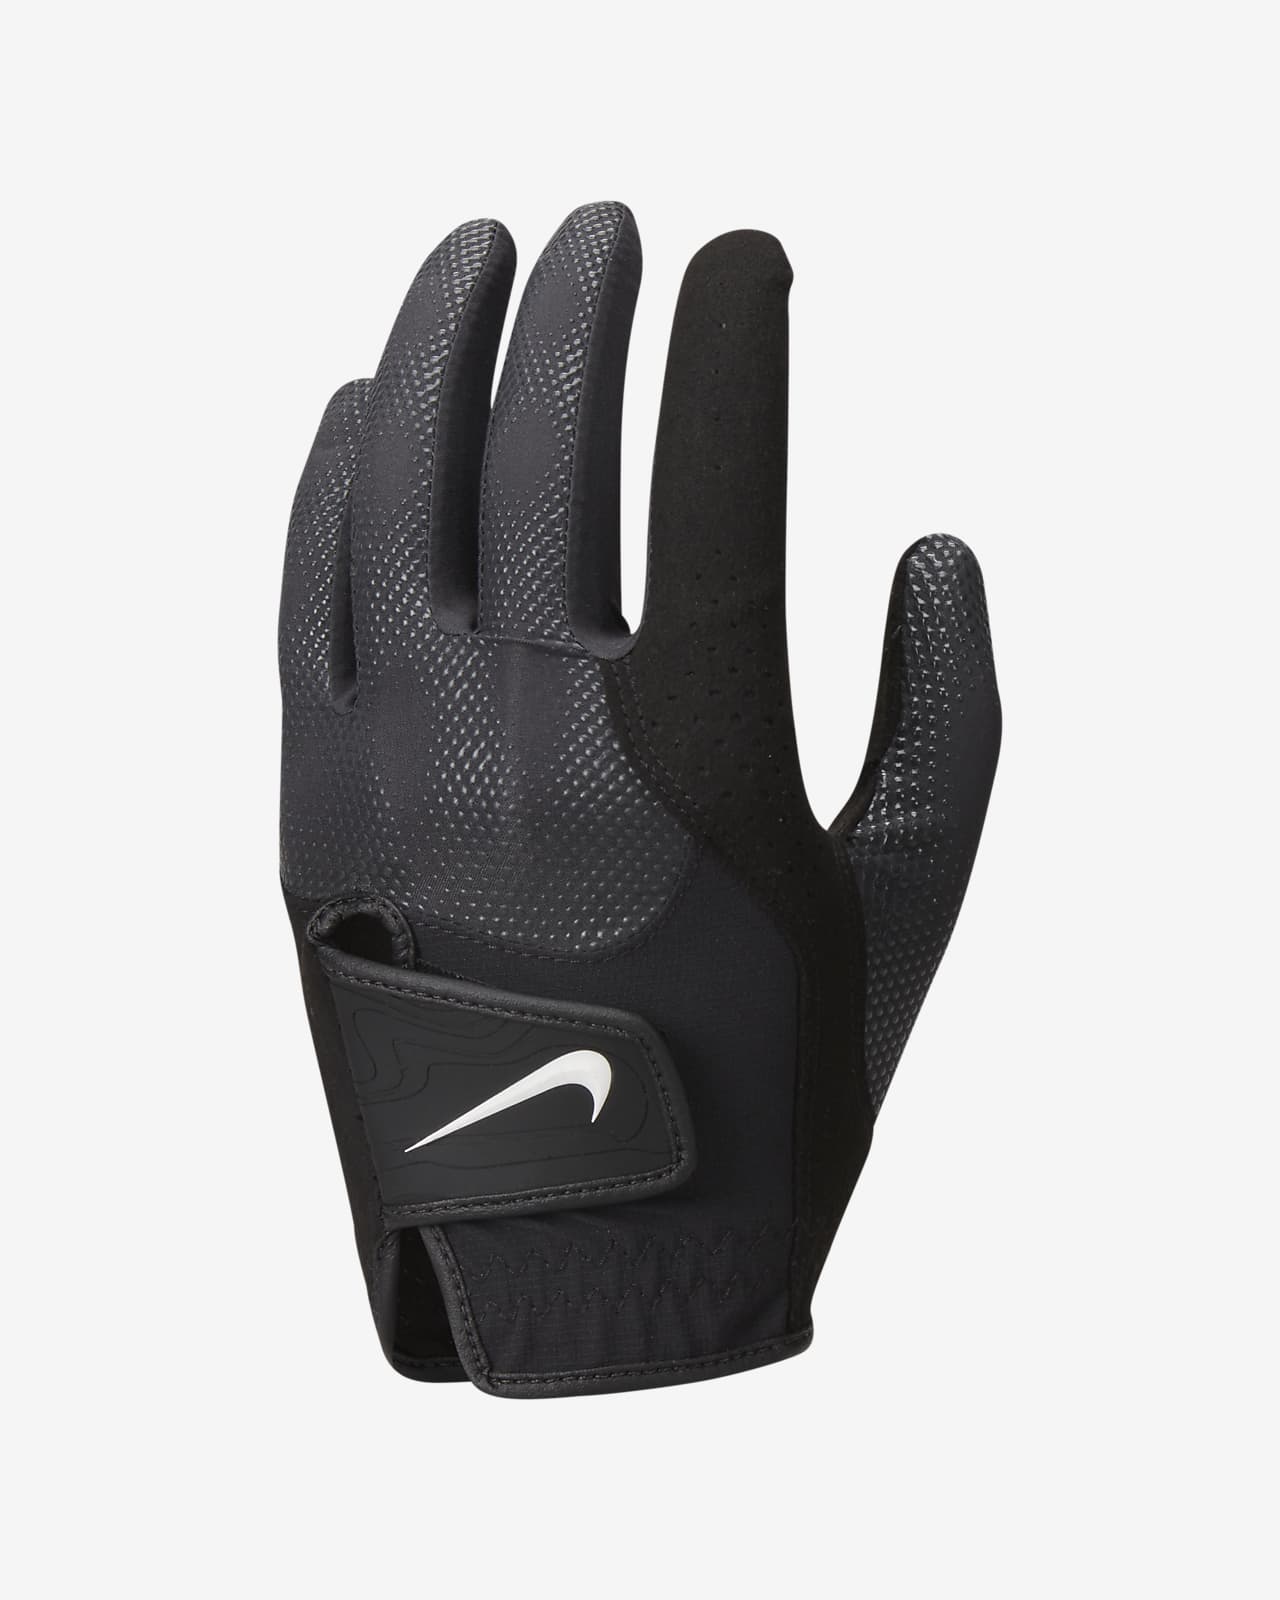 Nike Storm-FIT Women's Golf Gloves